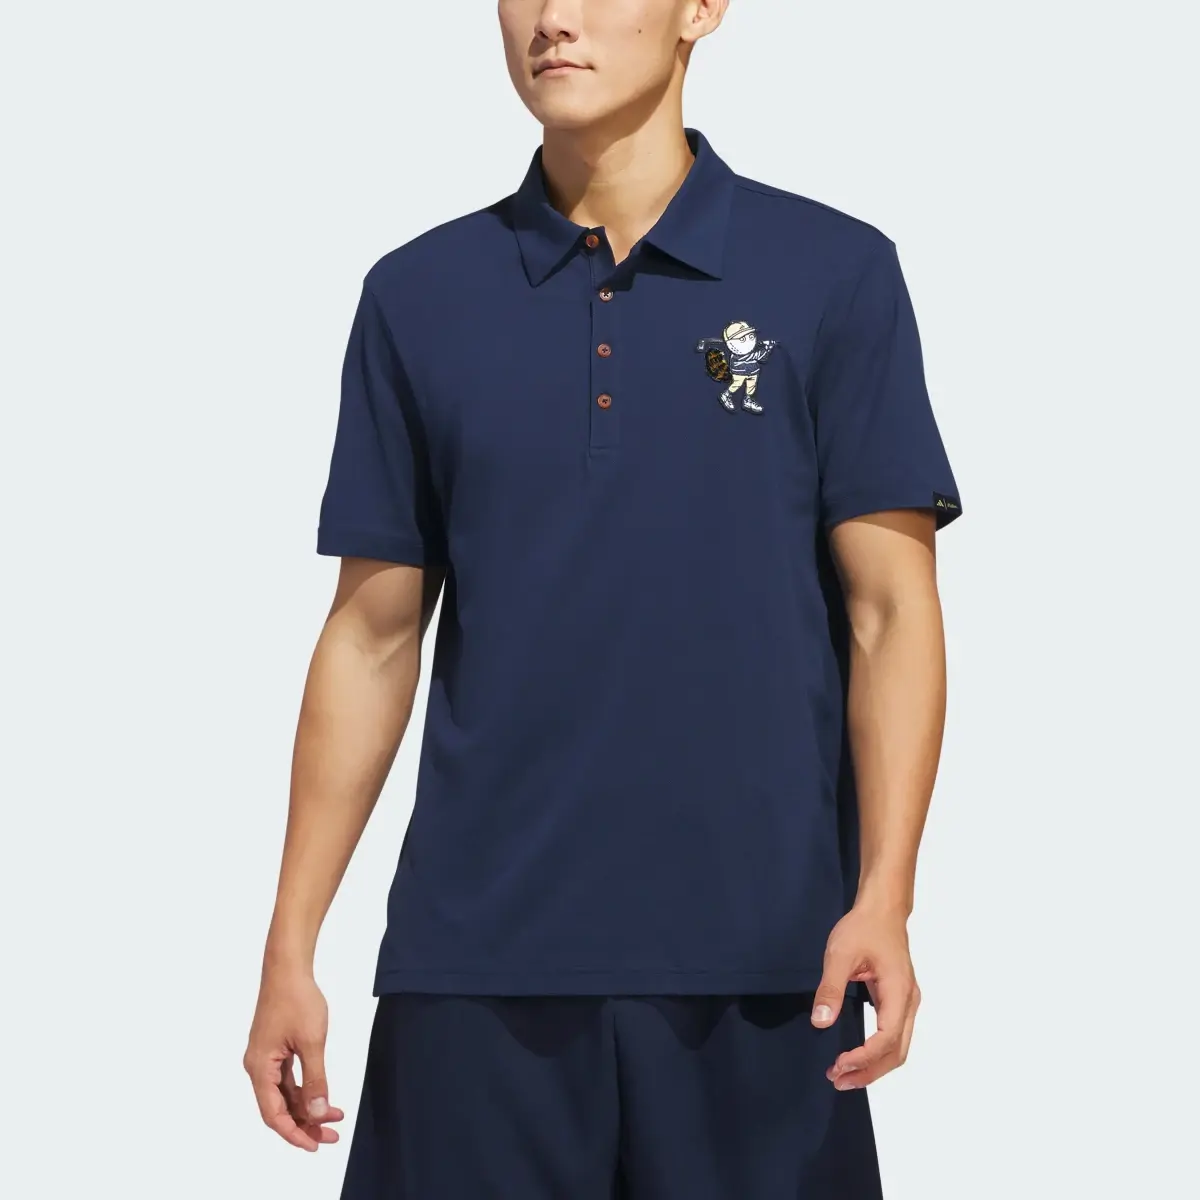 Adidas x Malbon Polo Shirt. 1